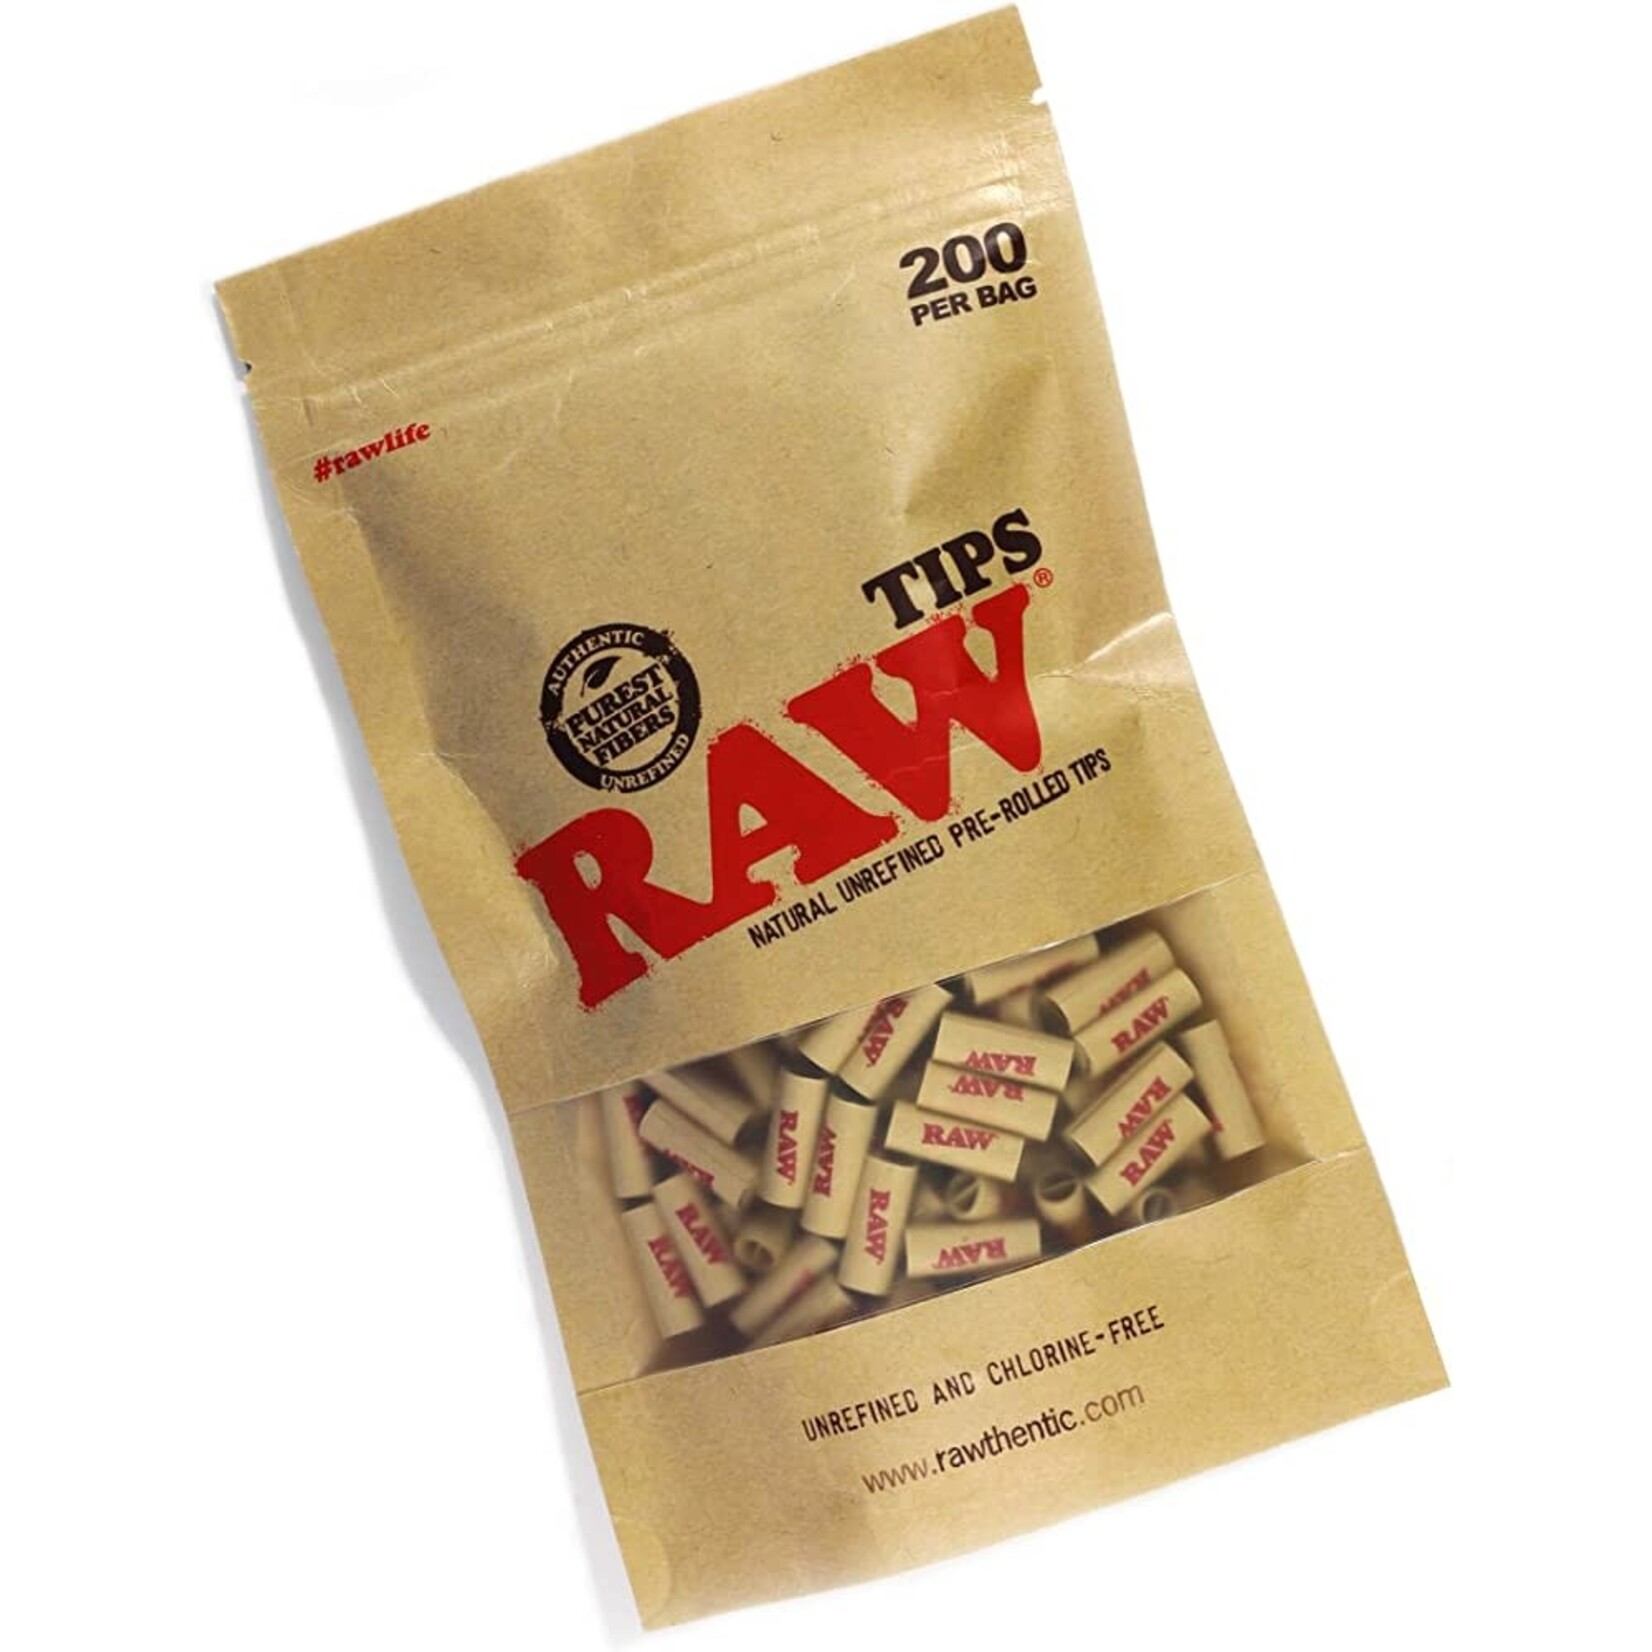 Raw® RAW® - Tips